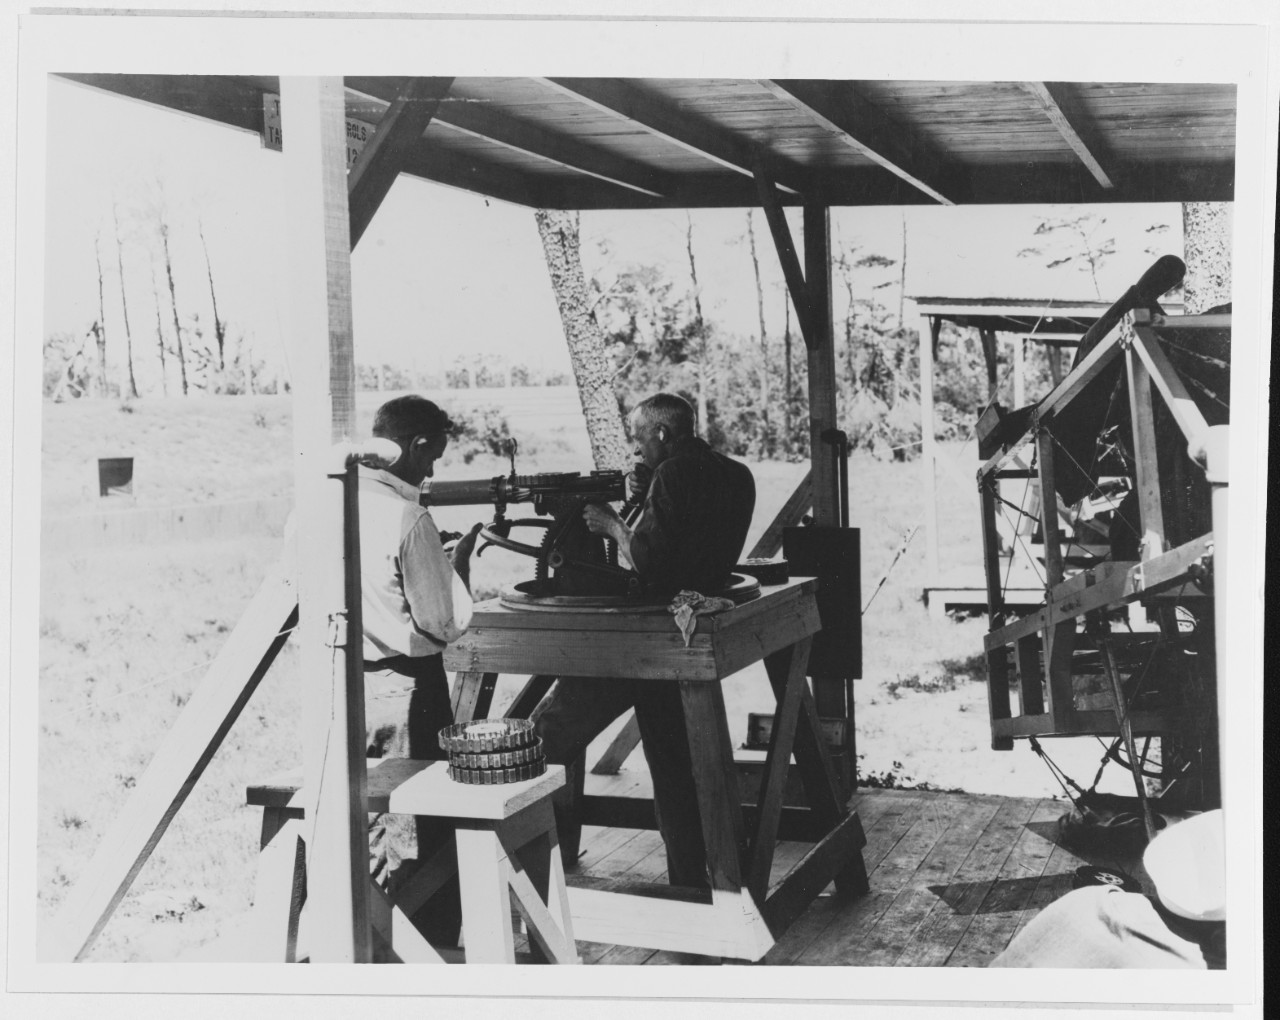 Photograph of Yarnell operating a machine gun